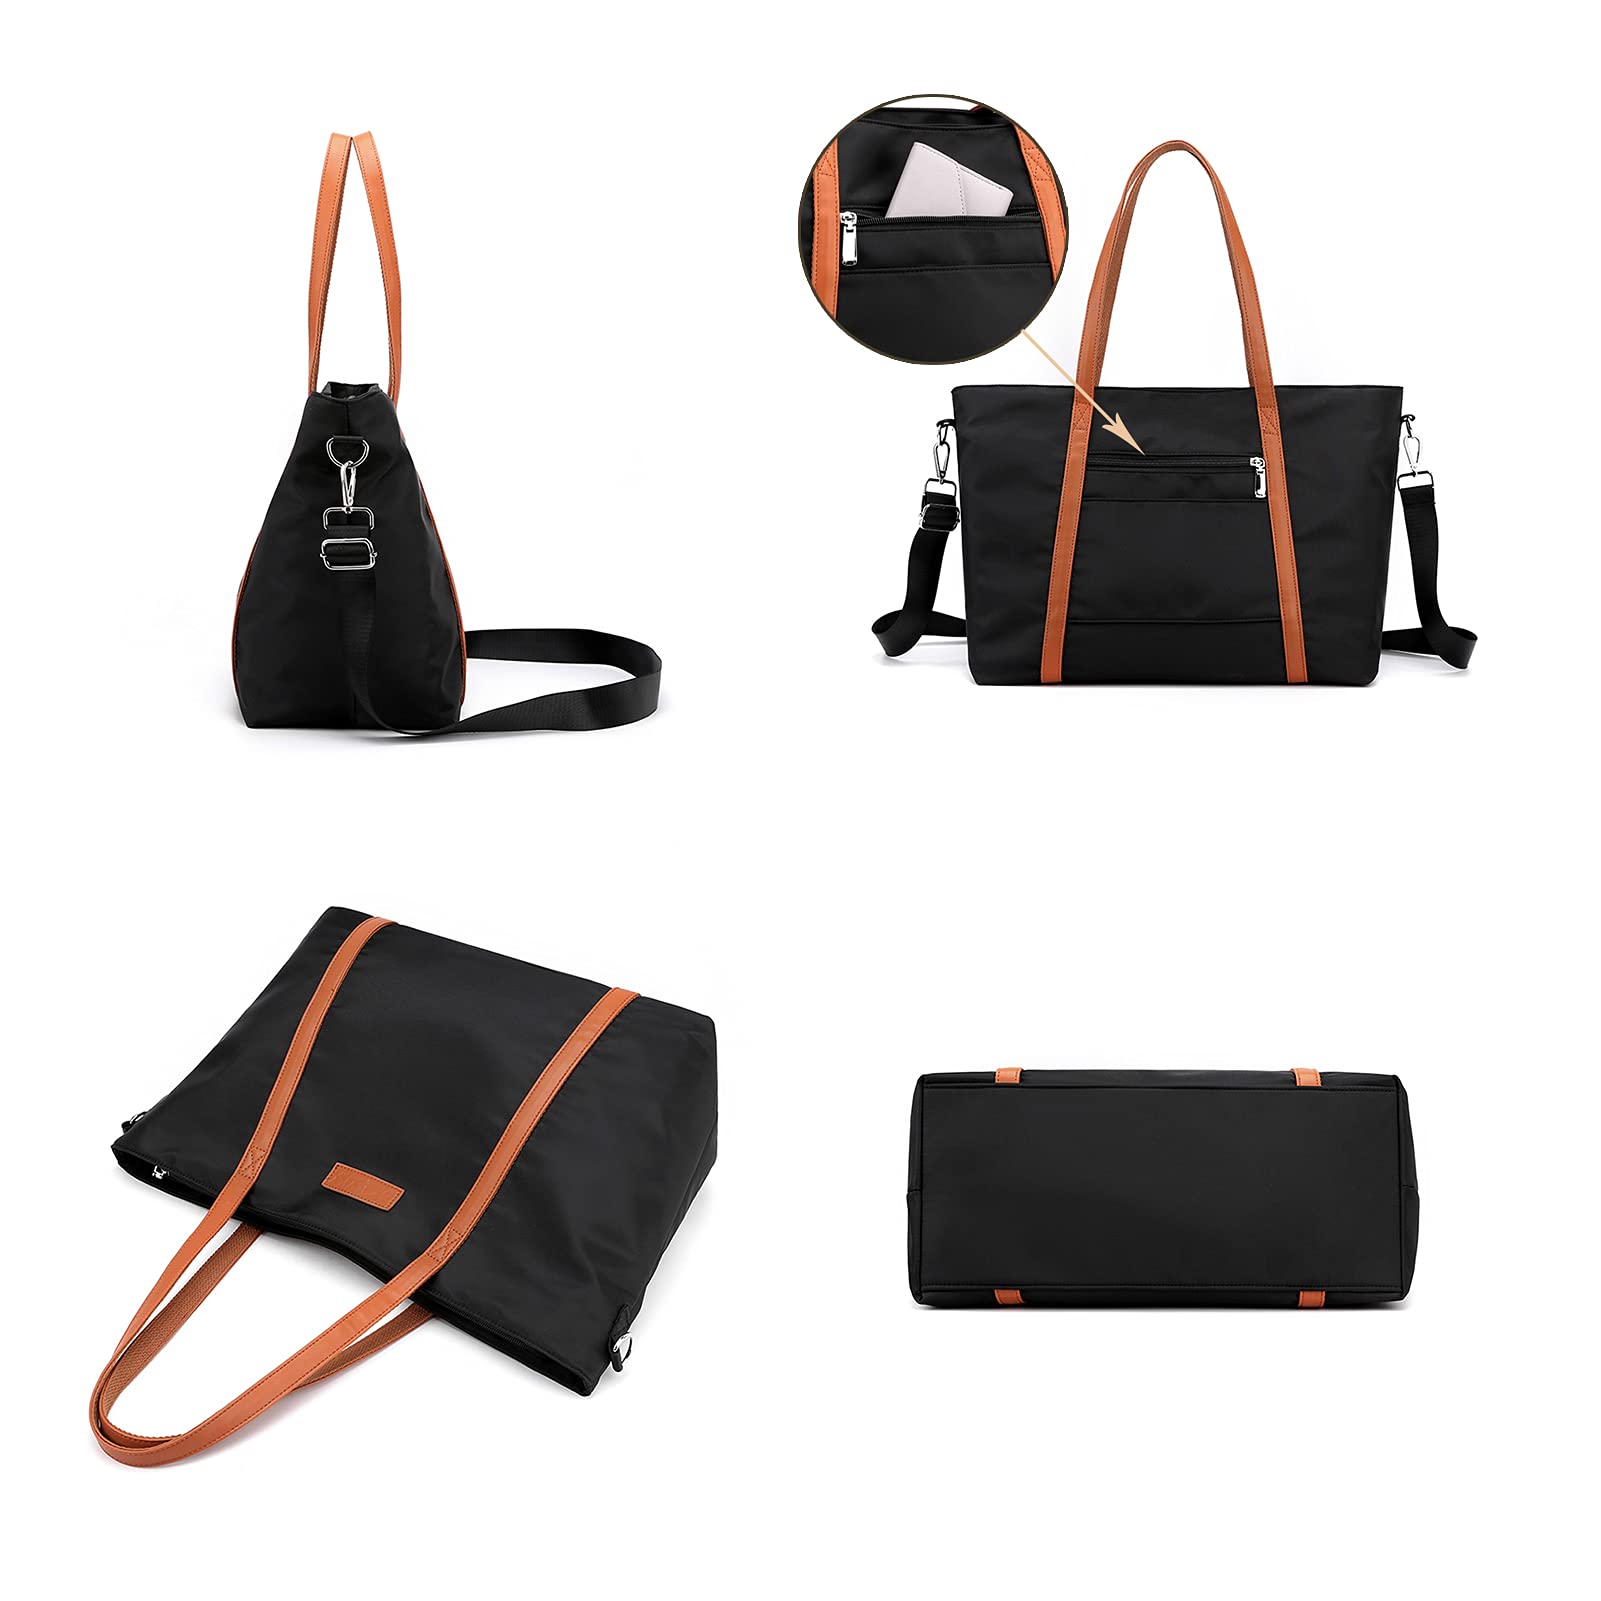 Laptop Bag Waterproof Lightweight Tote Bag for Women Nylon Briefcase Computer Work Shoulder Handbag Fits 15.6 inch Laptop with Trolley Sleeve (Pink)